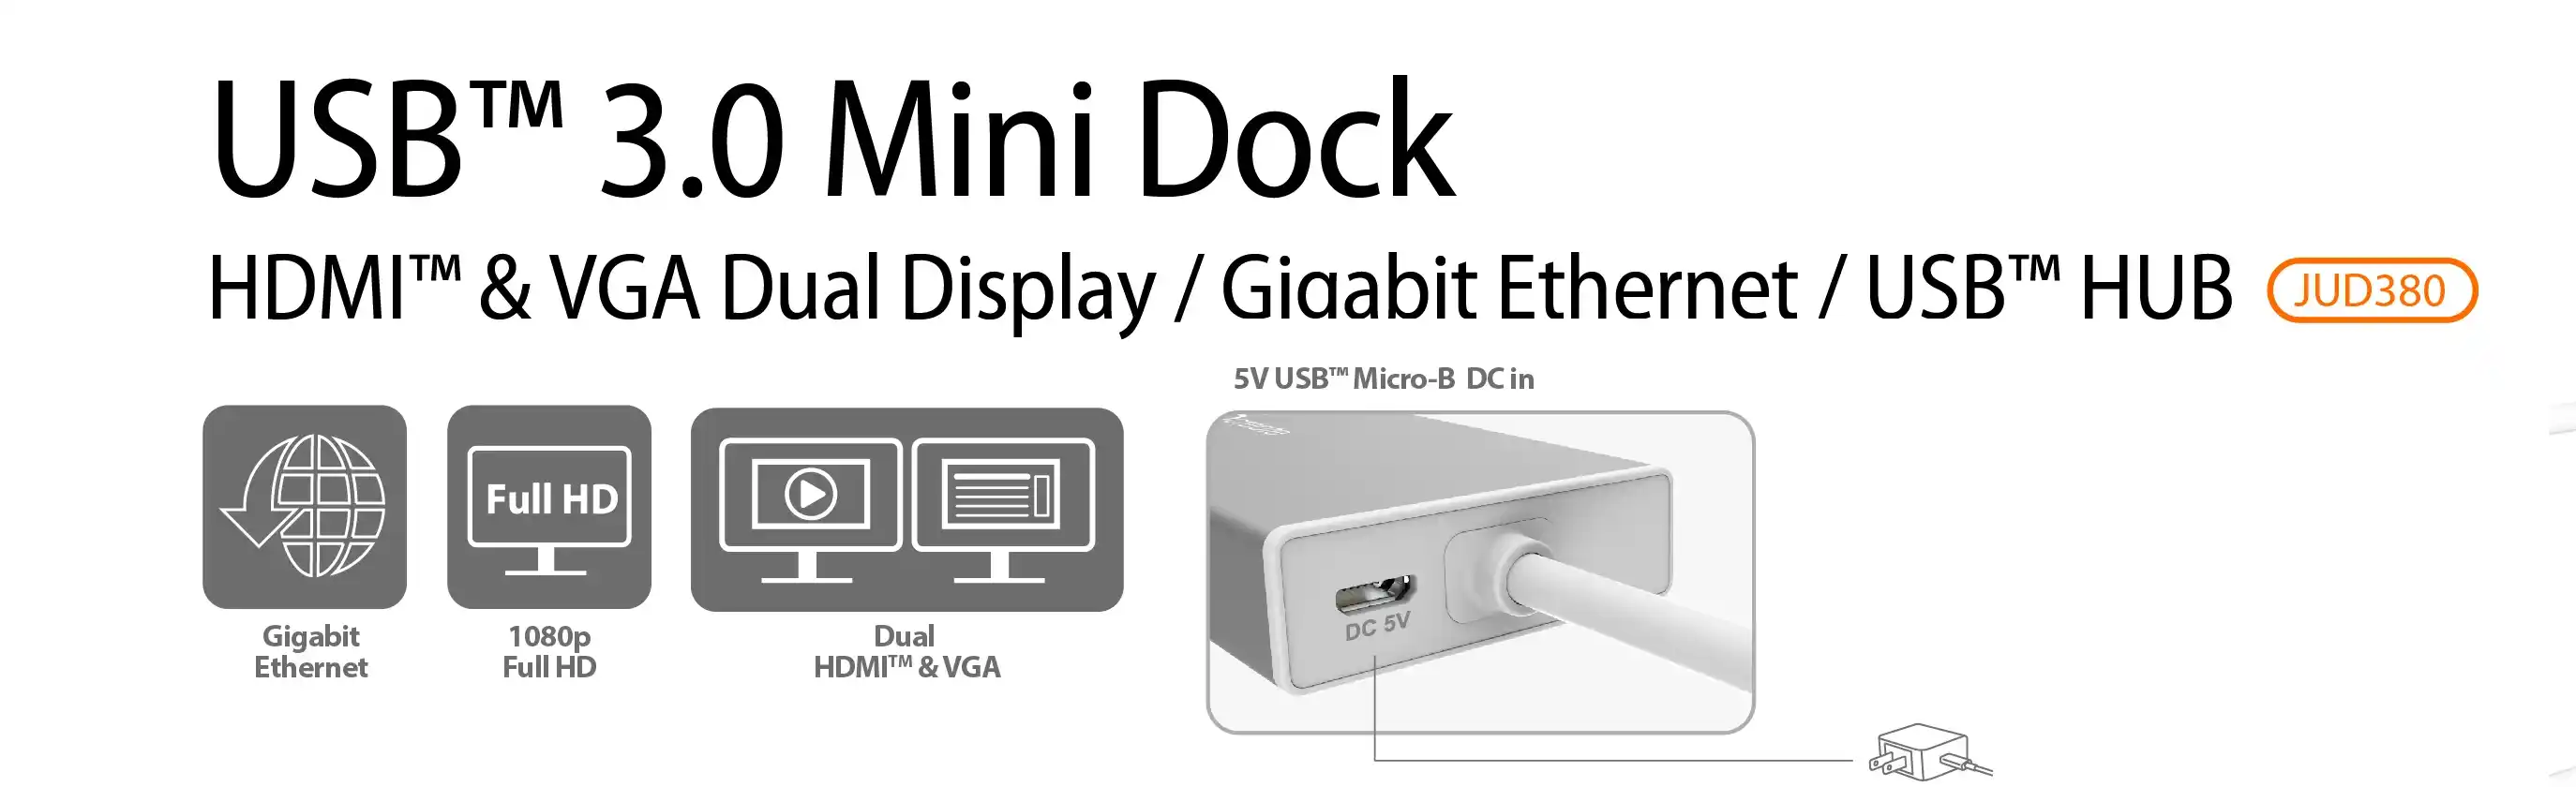 J5Create JUD380 USB 3.0 Mini Dock for Windows and Mac